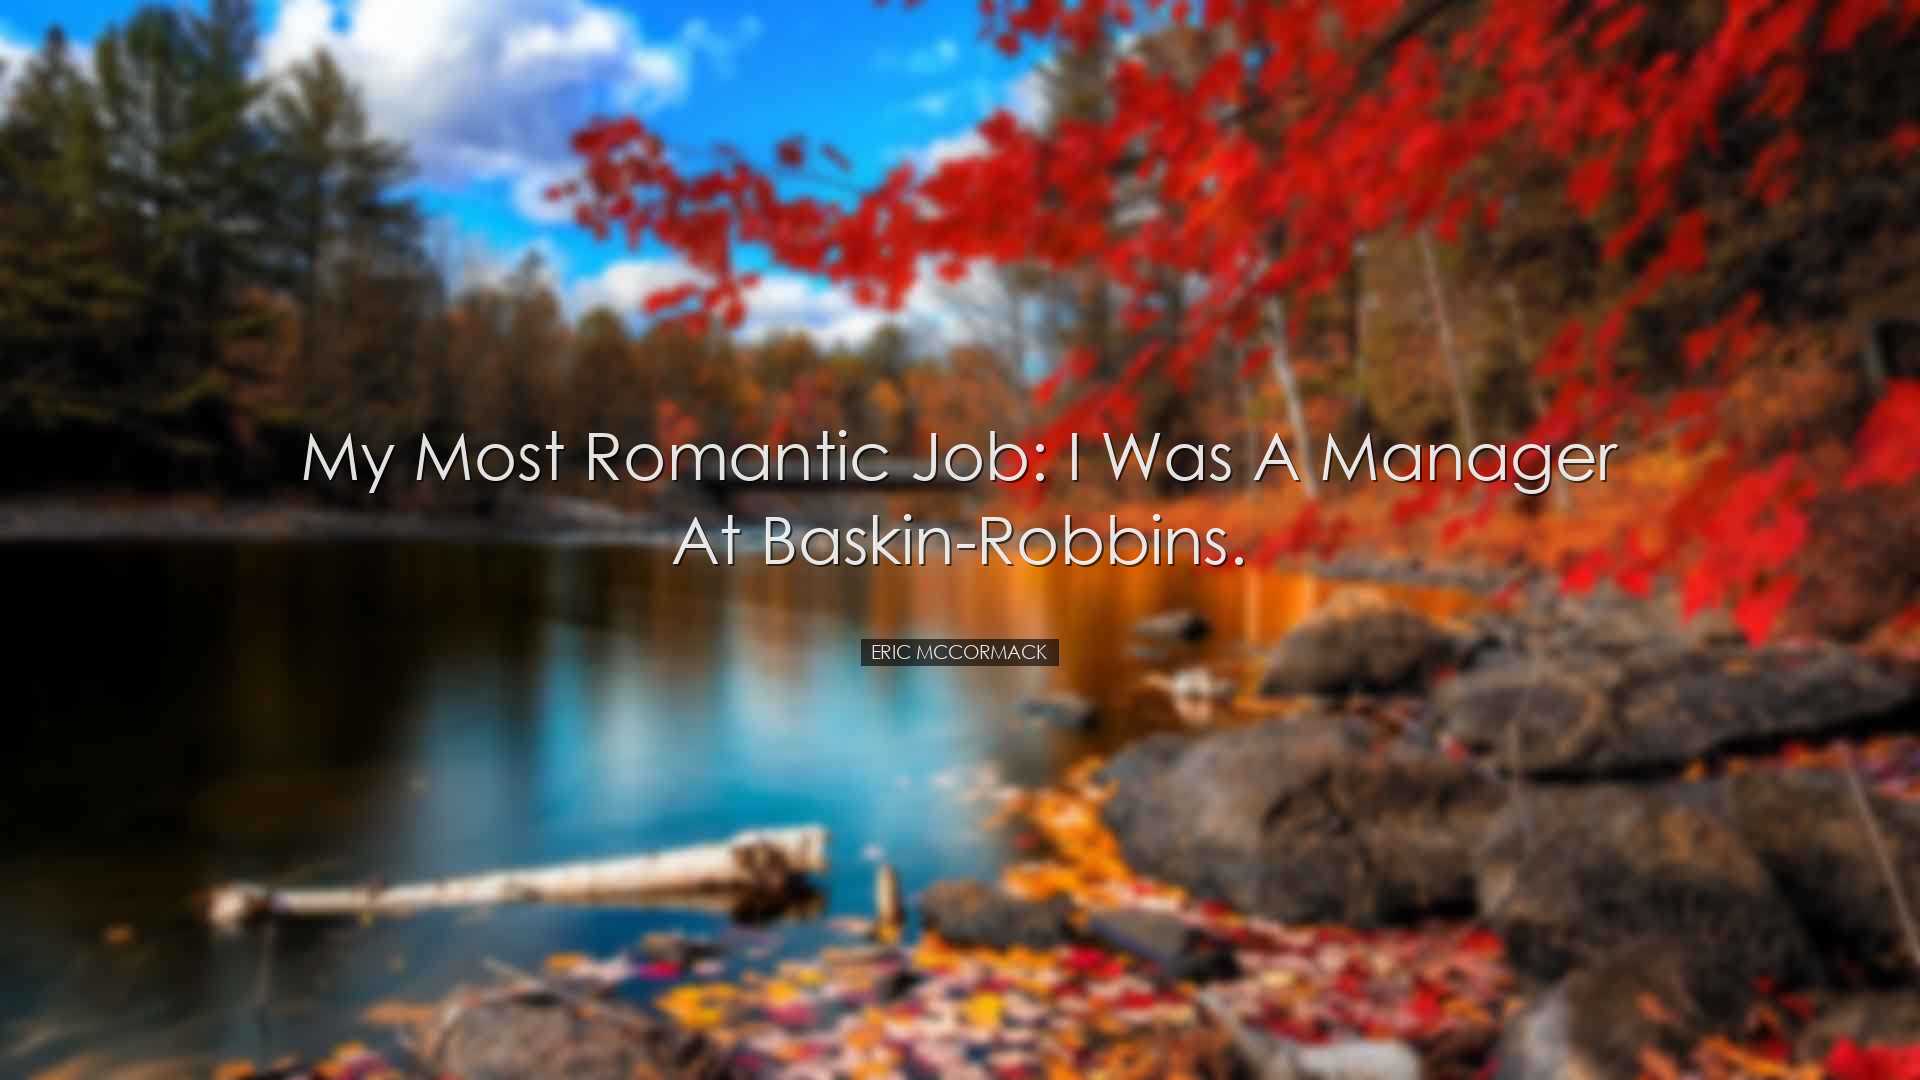 My most romantic job: I was a manager at Baskin-Robbins. - Eric Mc